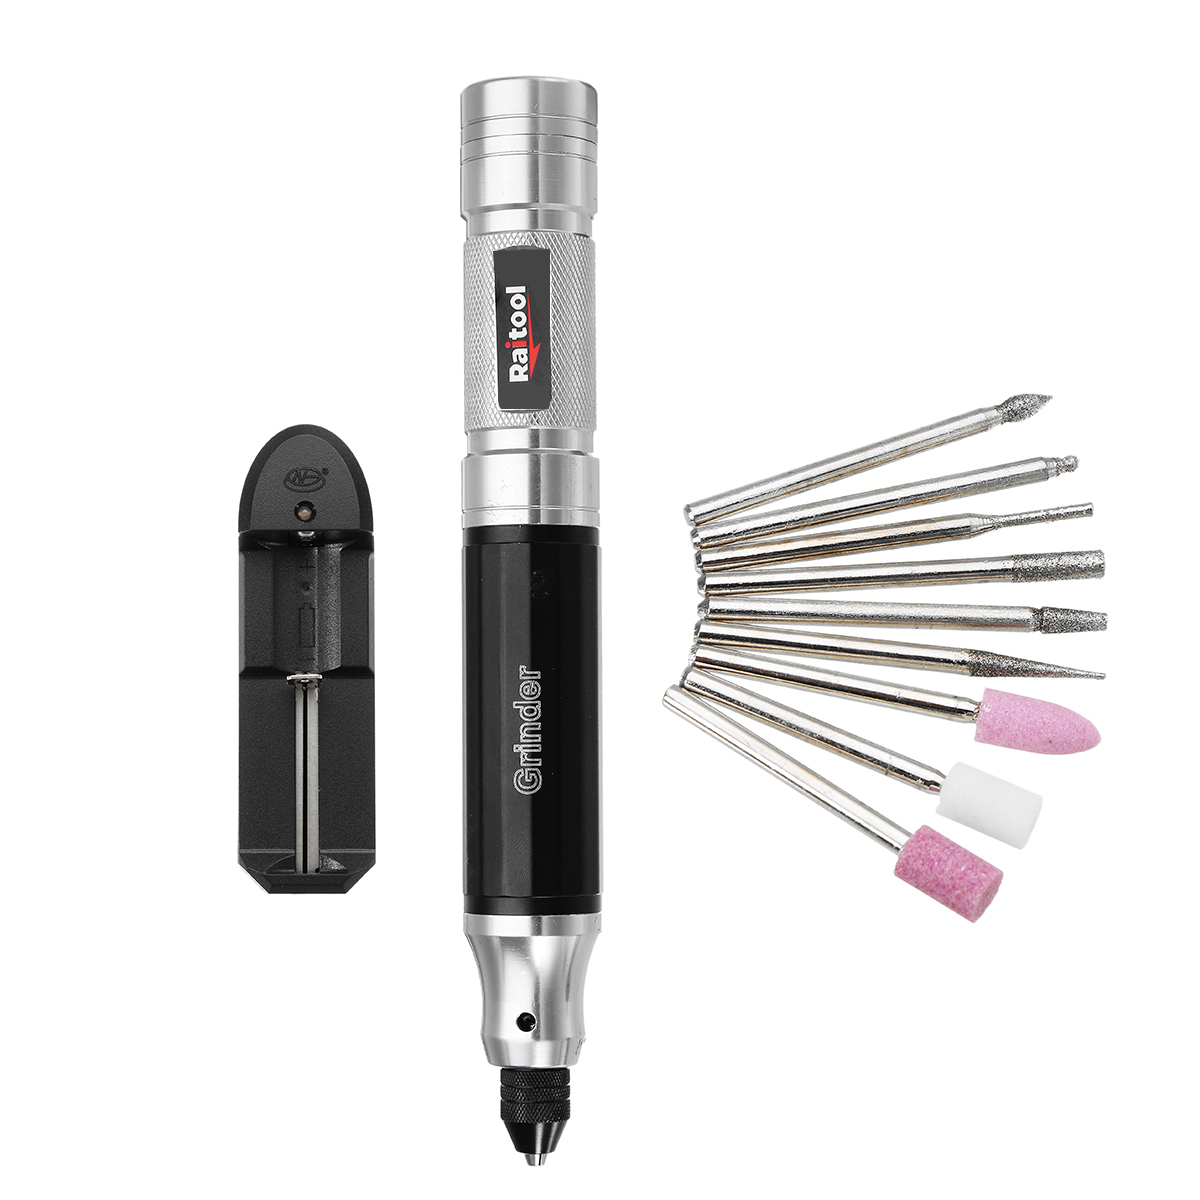 Raitool™ 3.7V 35W Mini Power Drills Electric Grinder Cordless Engraving Pen 46